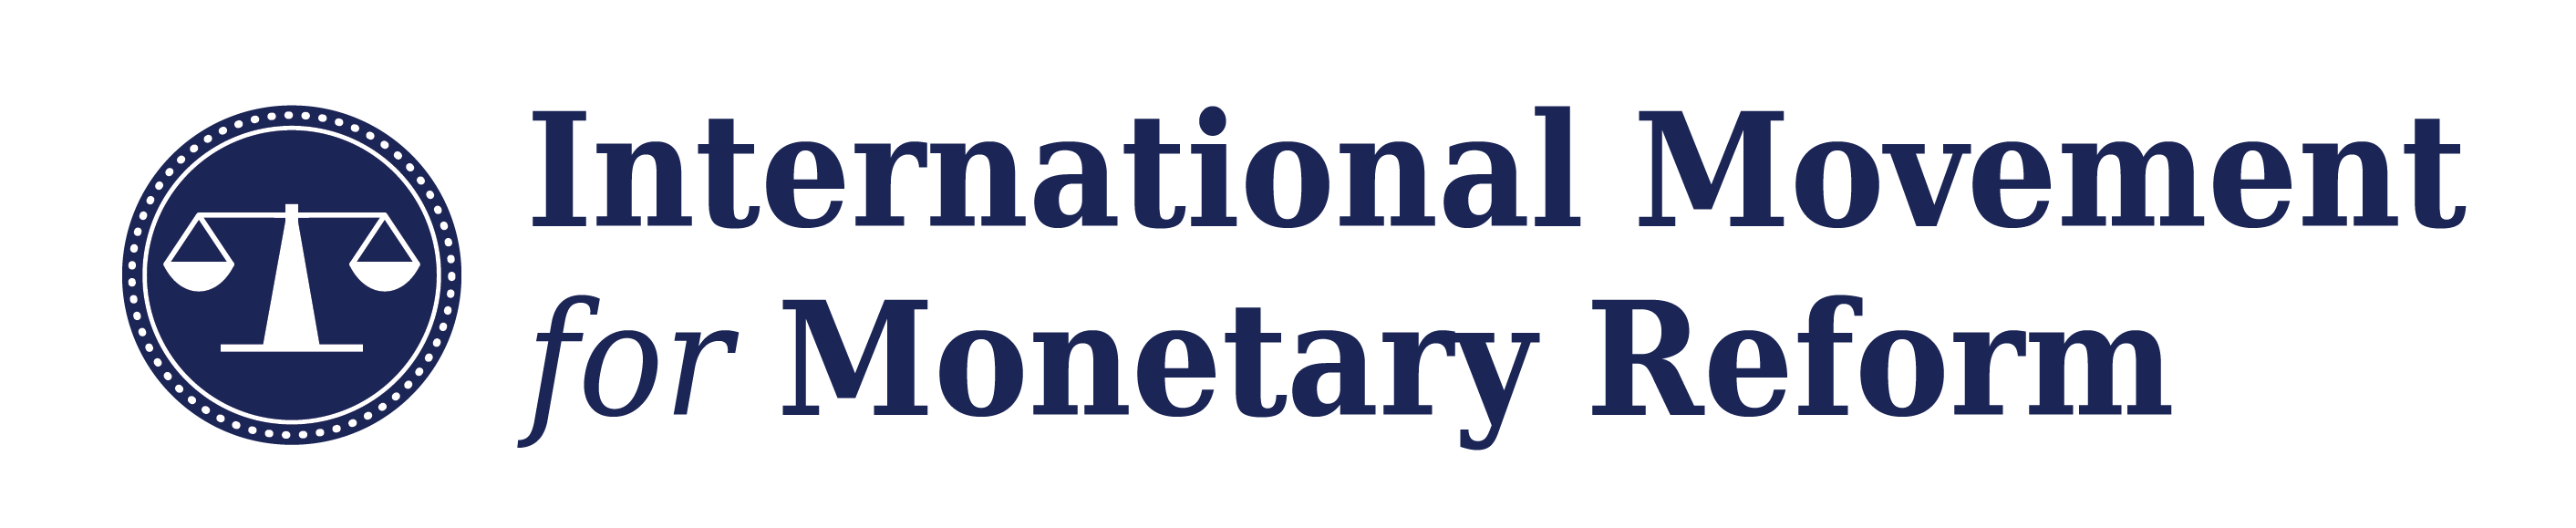 International Movement for Monetary Reform